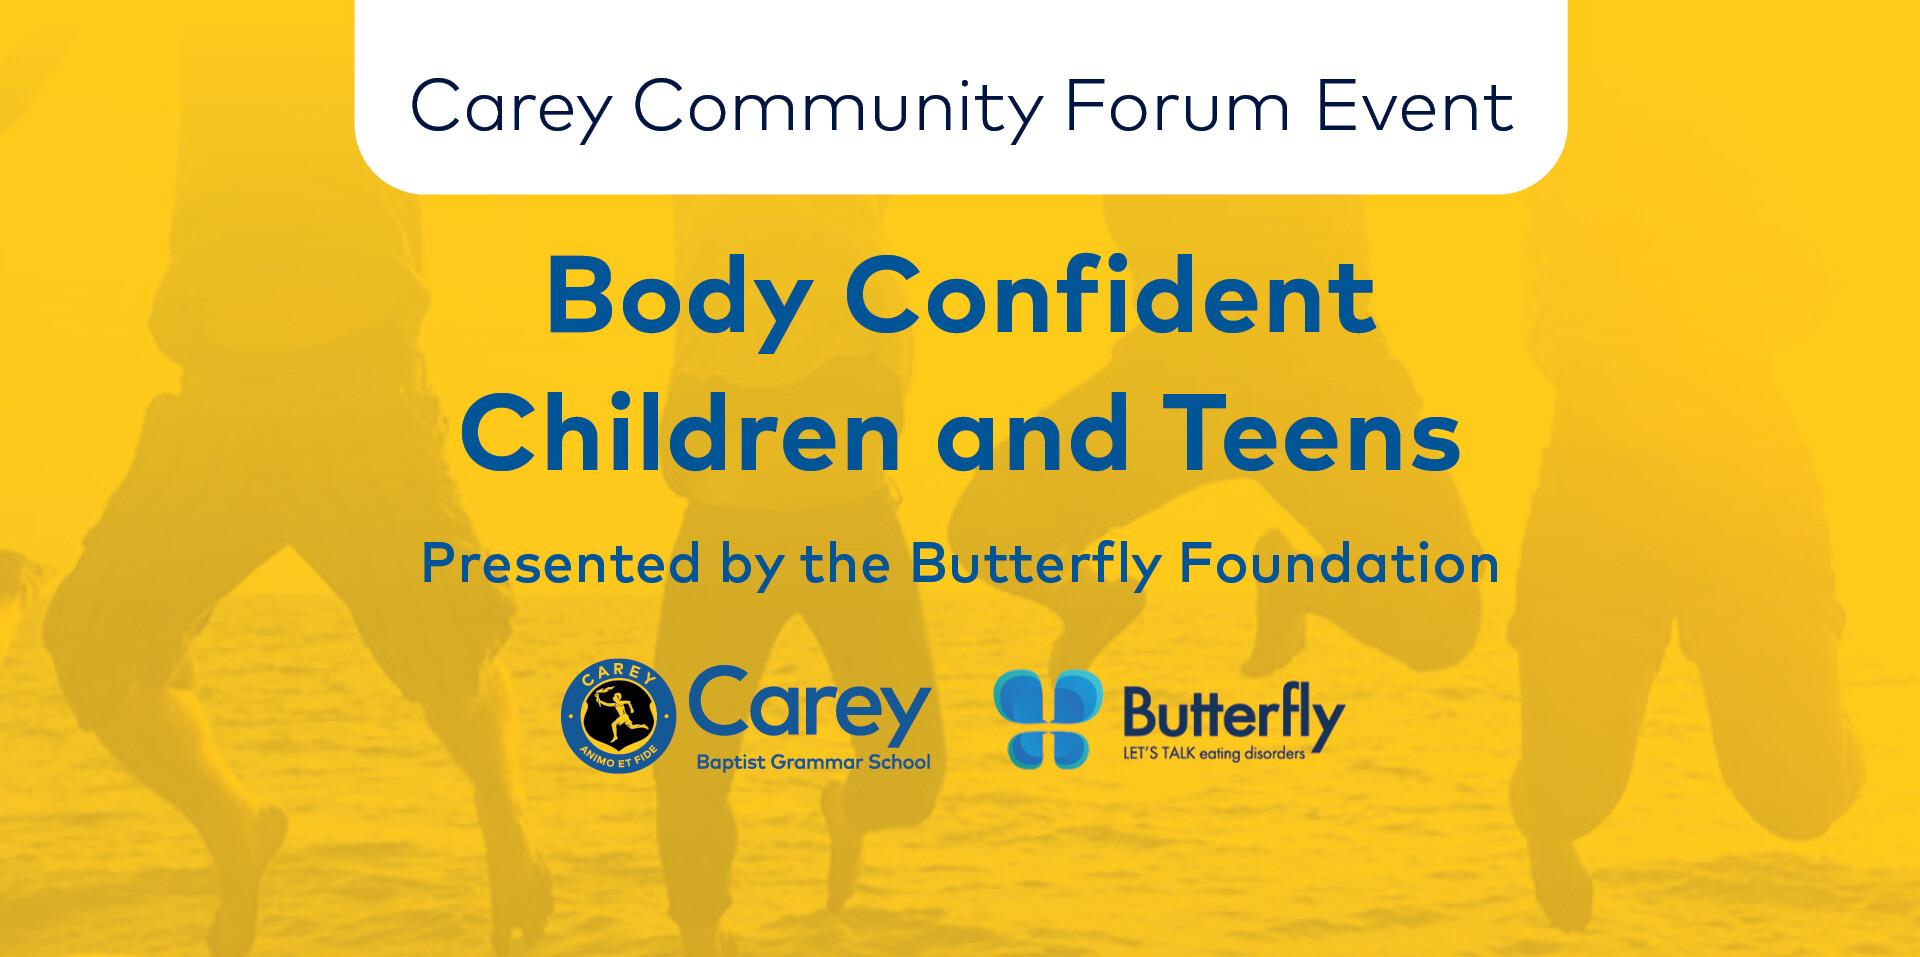 Carey Community Forum